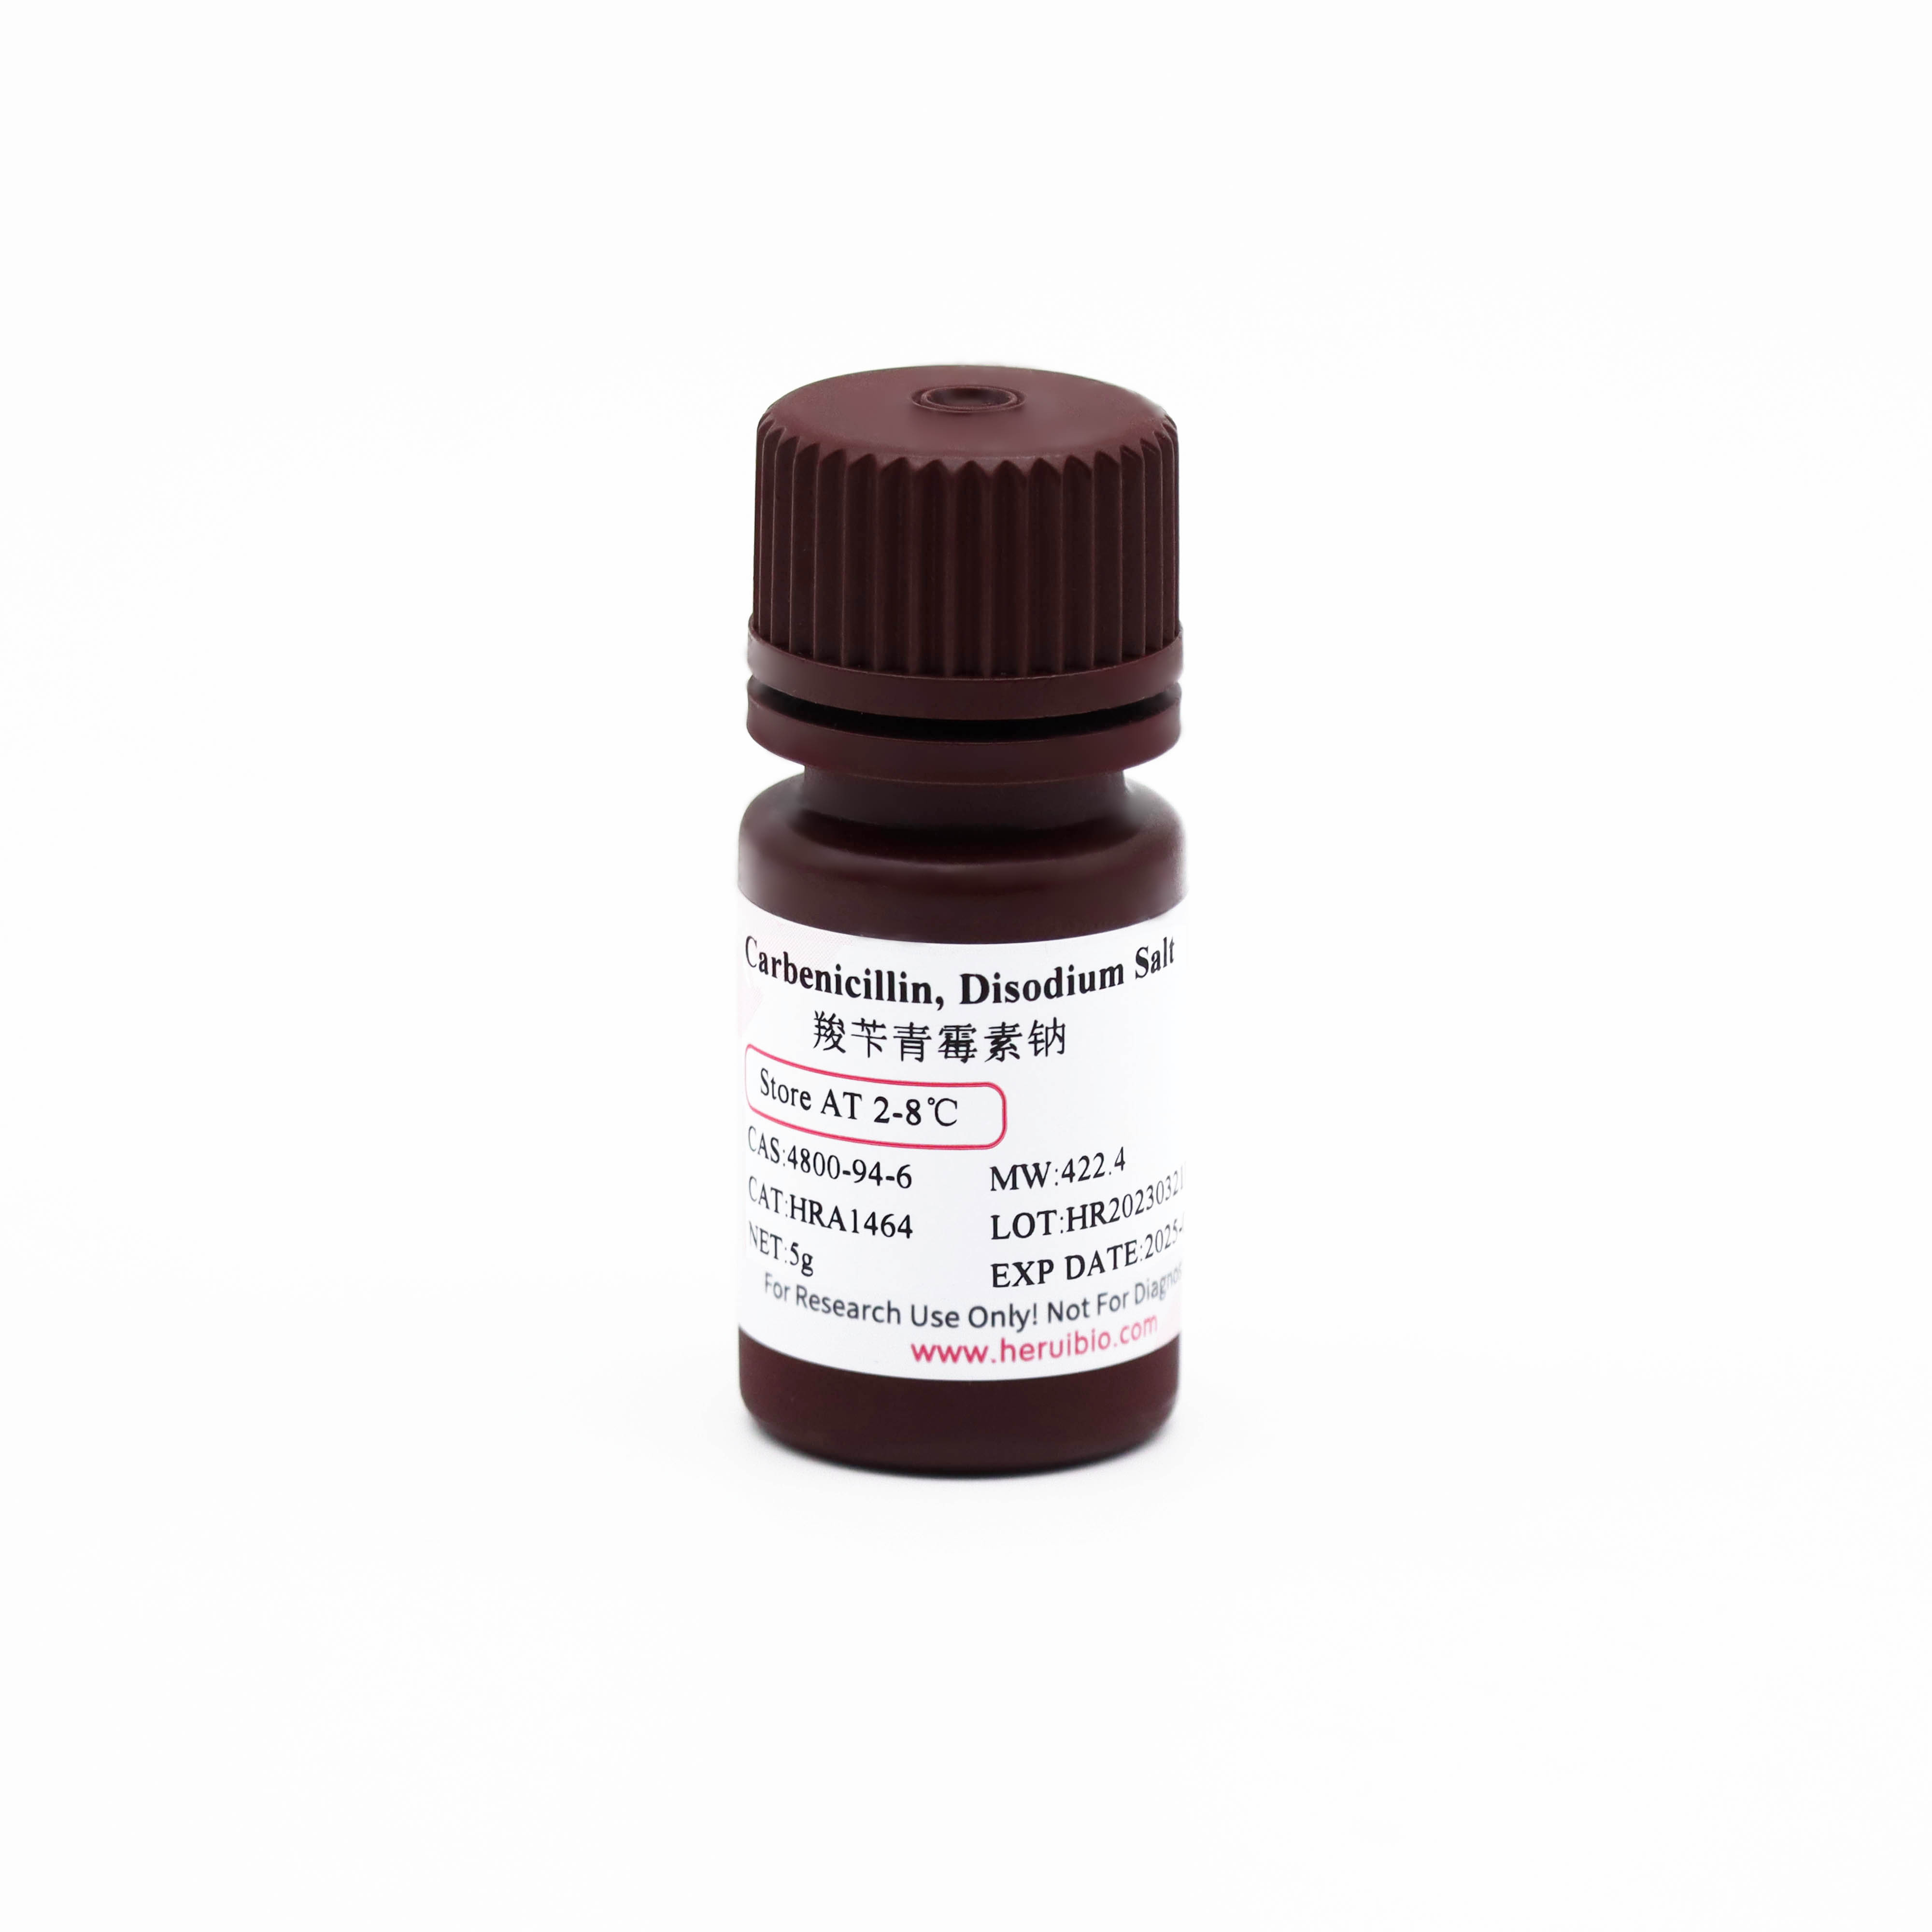 Carbenicillin, Disodium Salt 羧苄青霉素钠